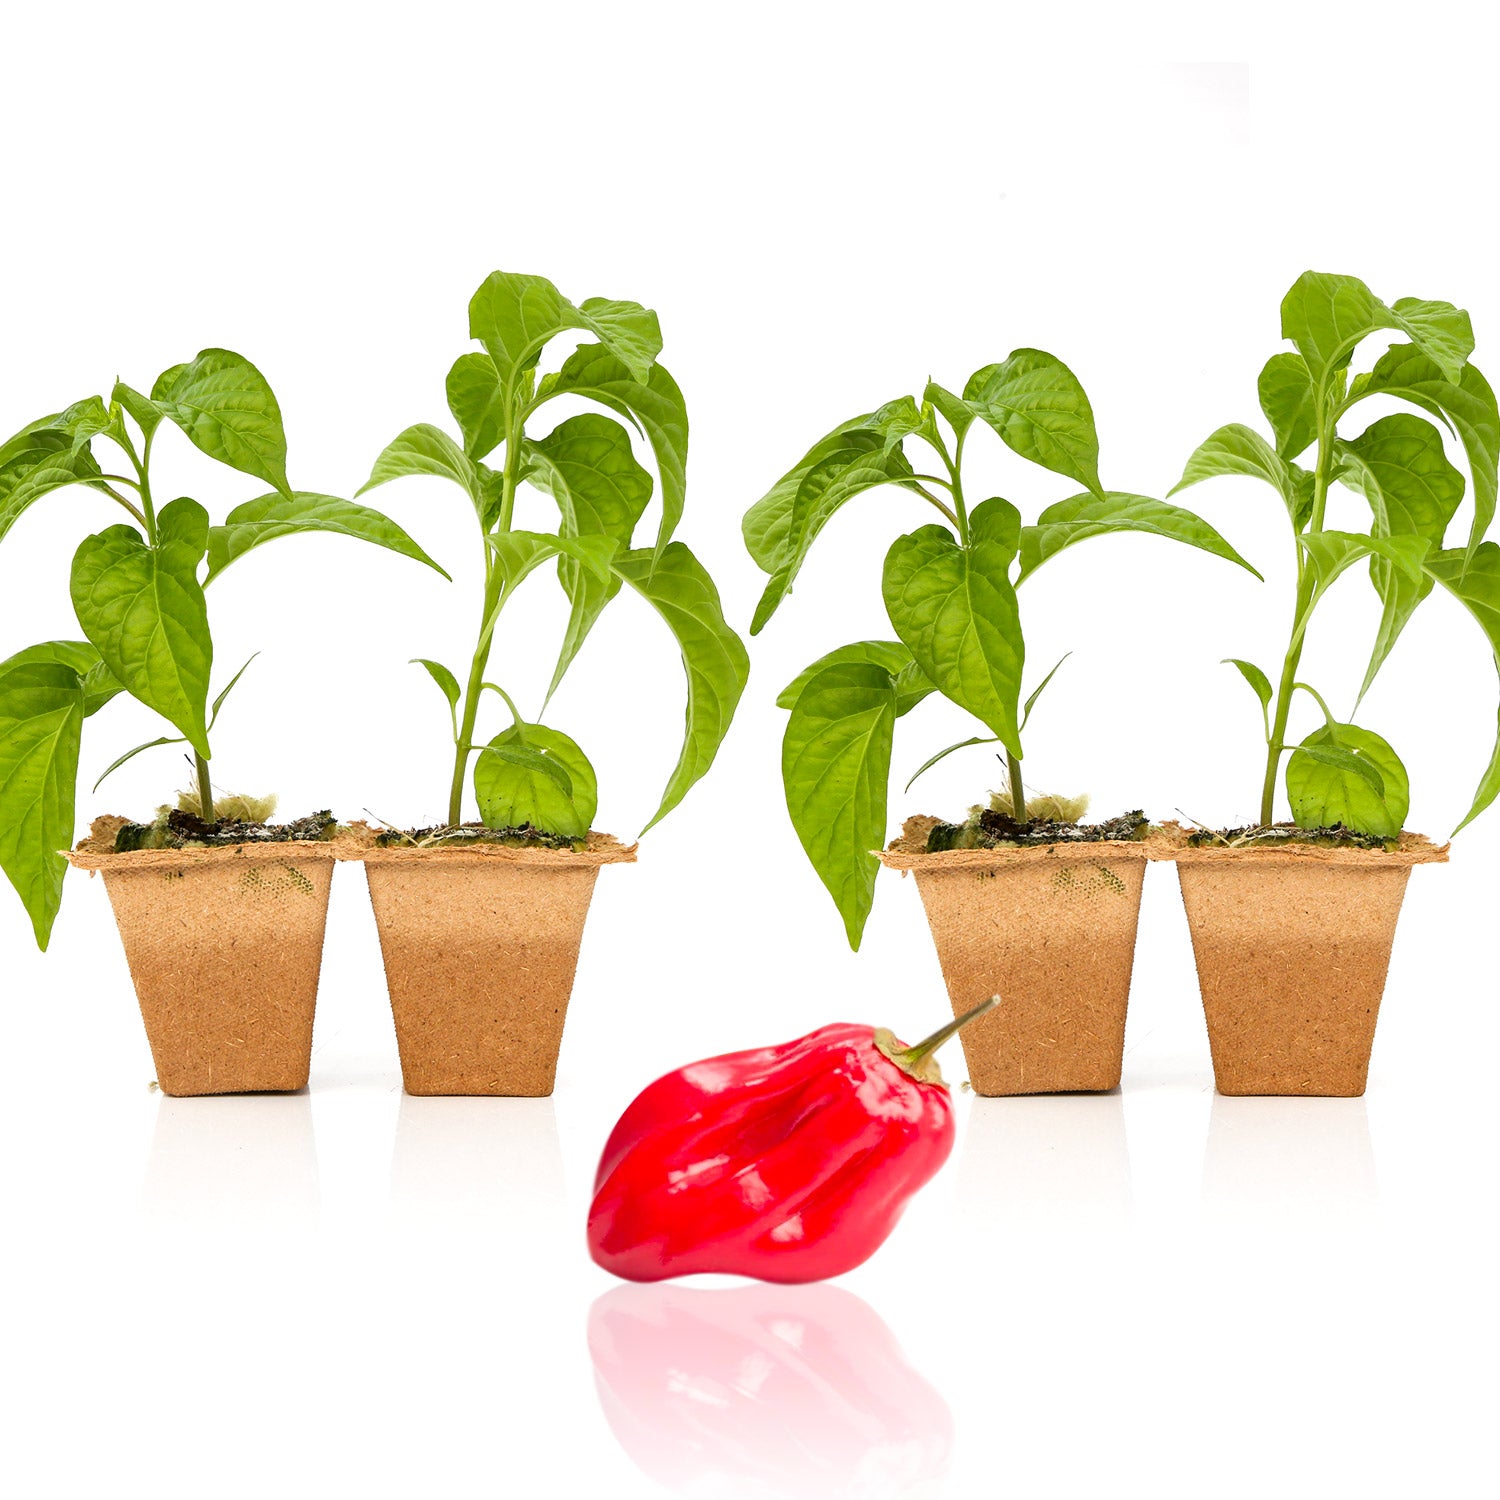 Pepper Joe's Red Savina Habanero plants for sale